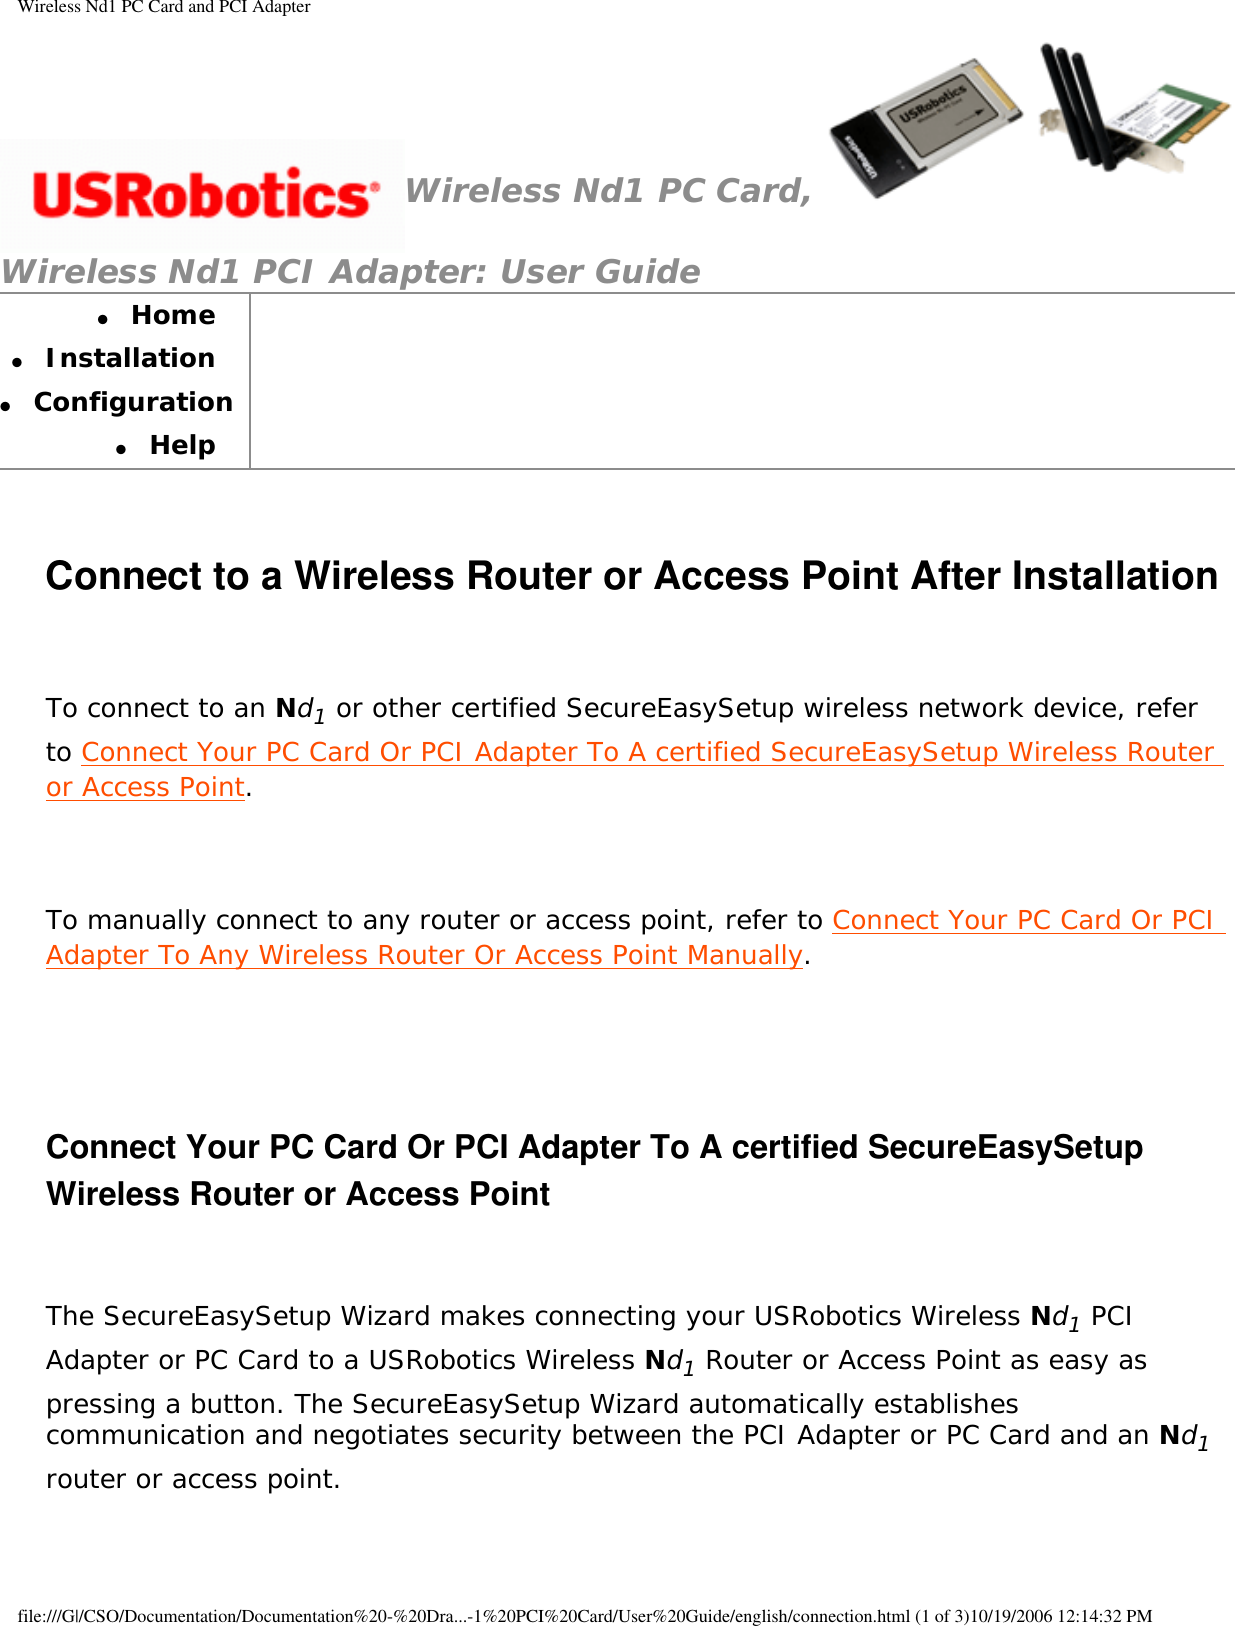 Page 13 of GemTek Technology P950622G USRobotics Wireless Nd1 PCI Adapter User Manual Wireless Nd1 PC Card and PCI Adapter